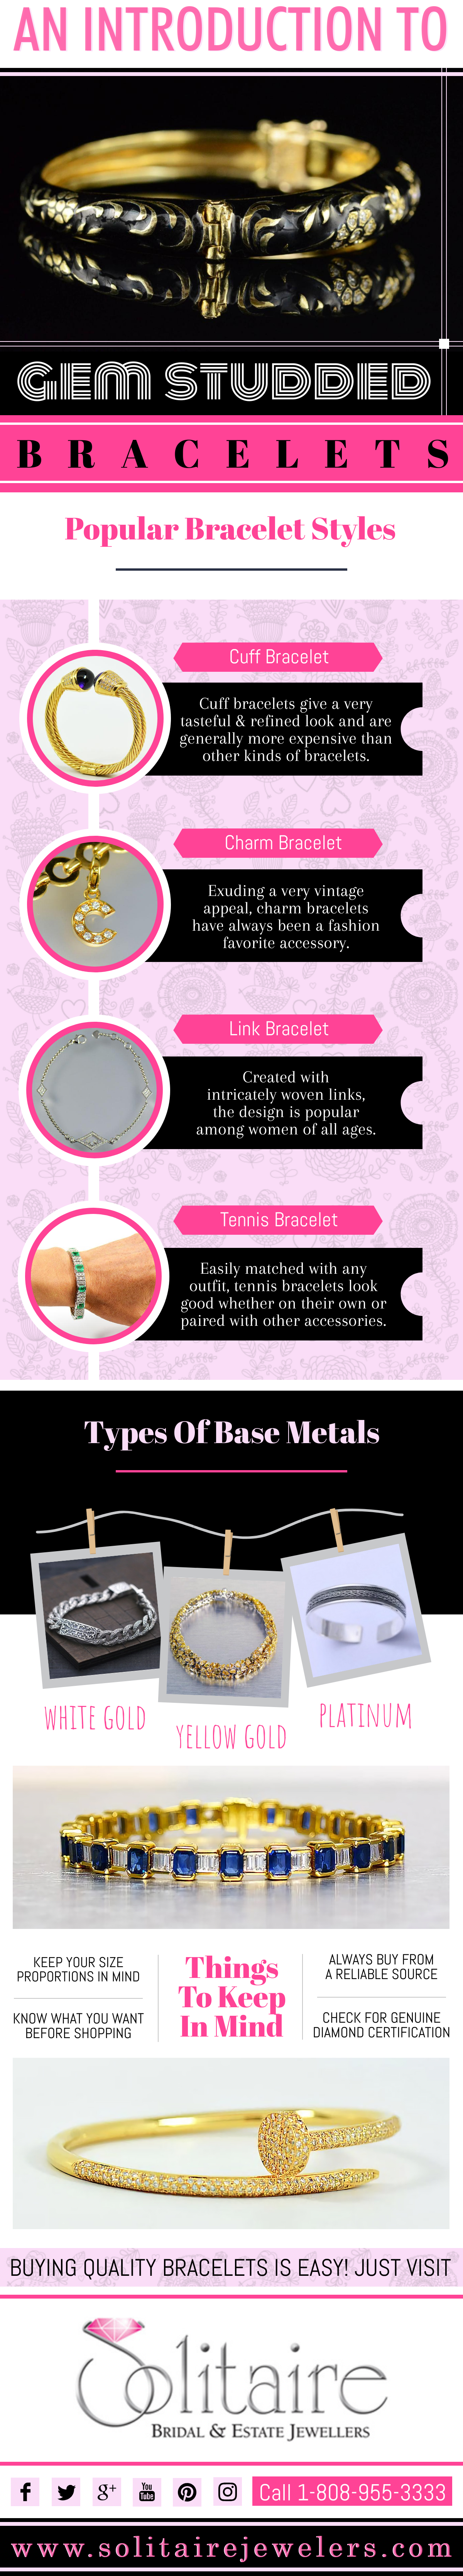 Introduction To Gem Studded Bracelets